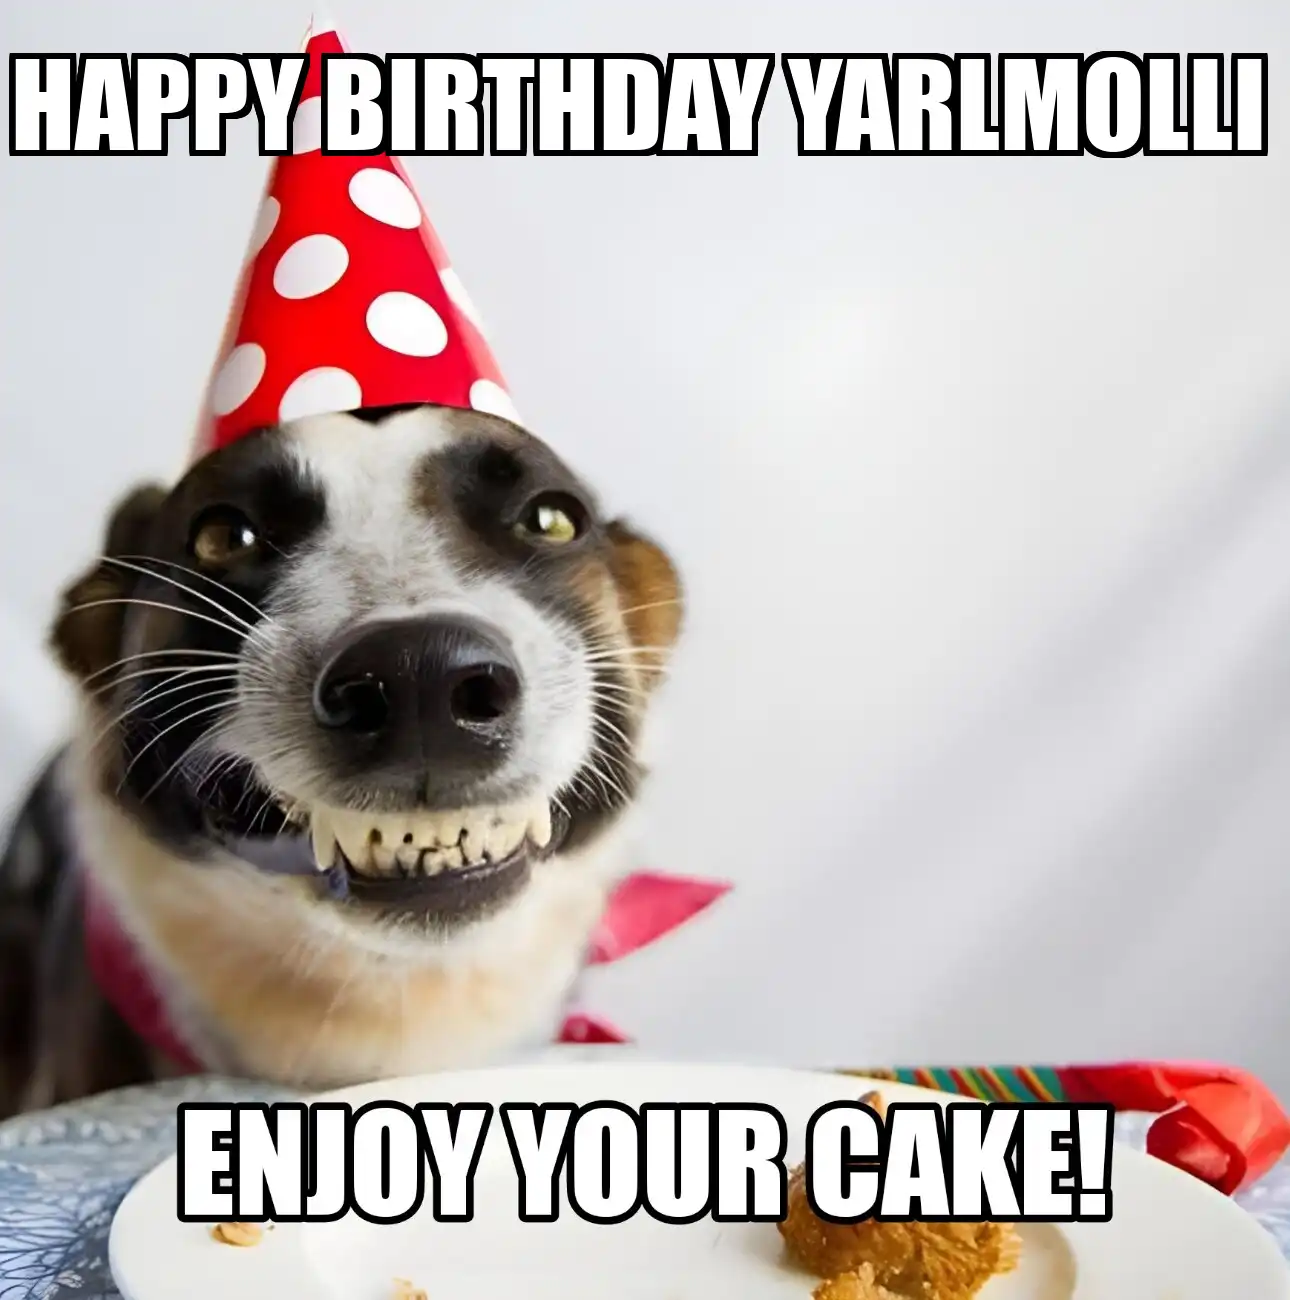 Happy Birthday Yarlmolli Enjoy Your Cake Dog Meme